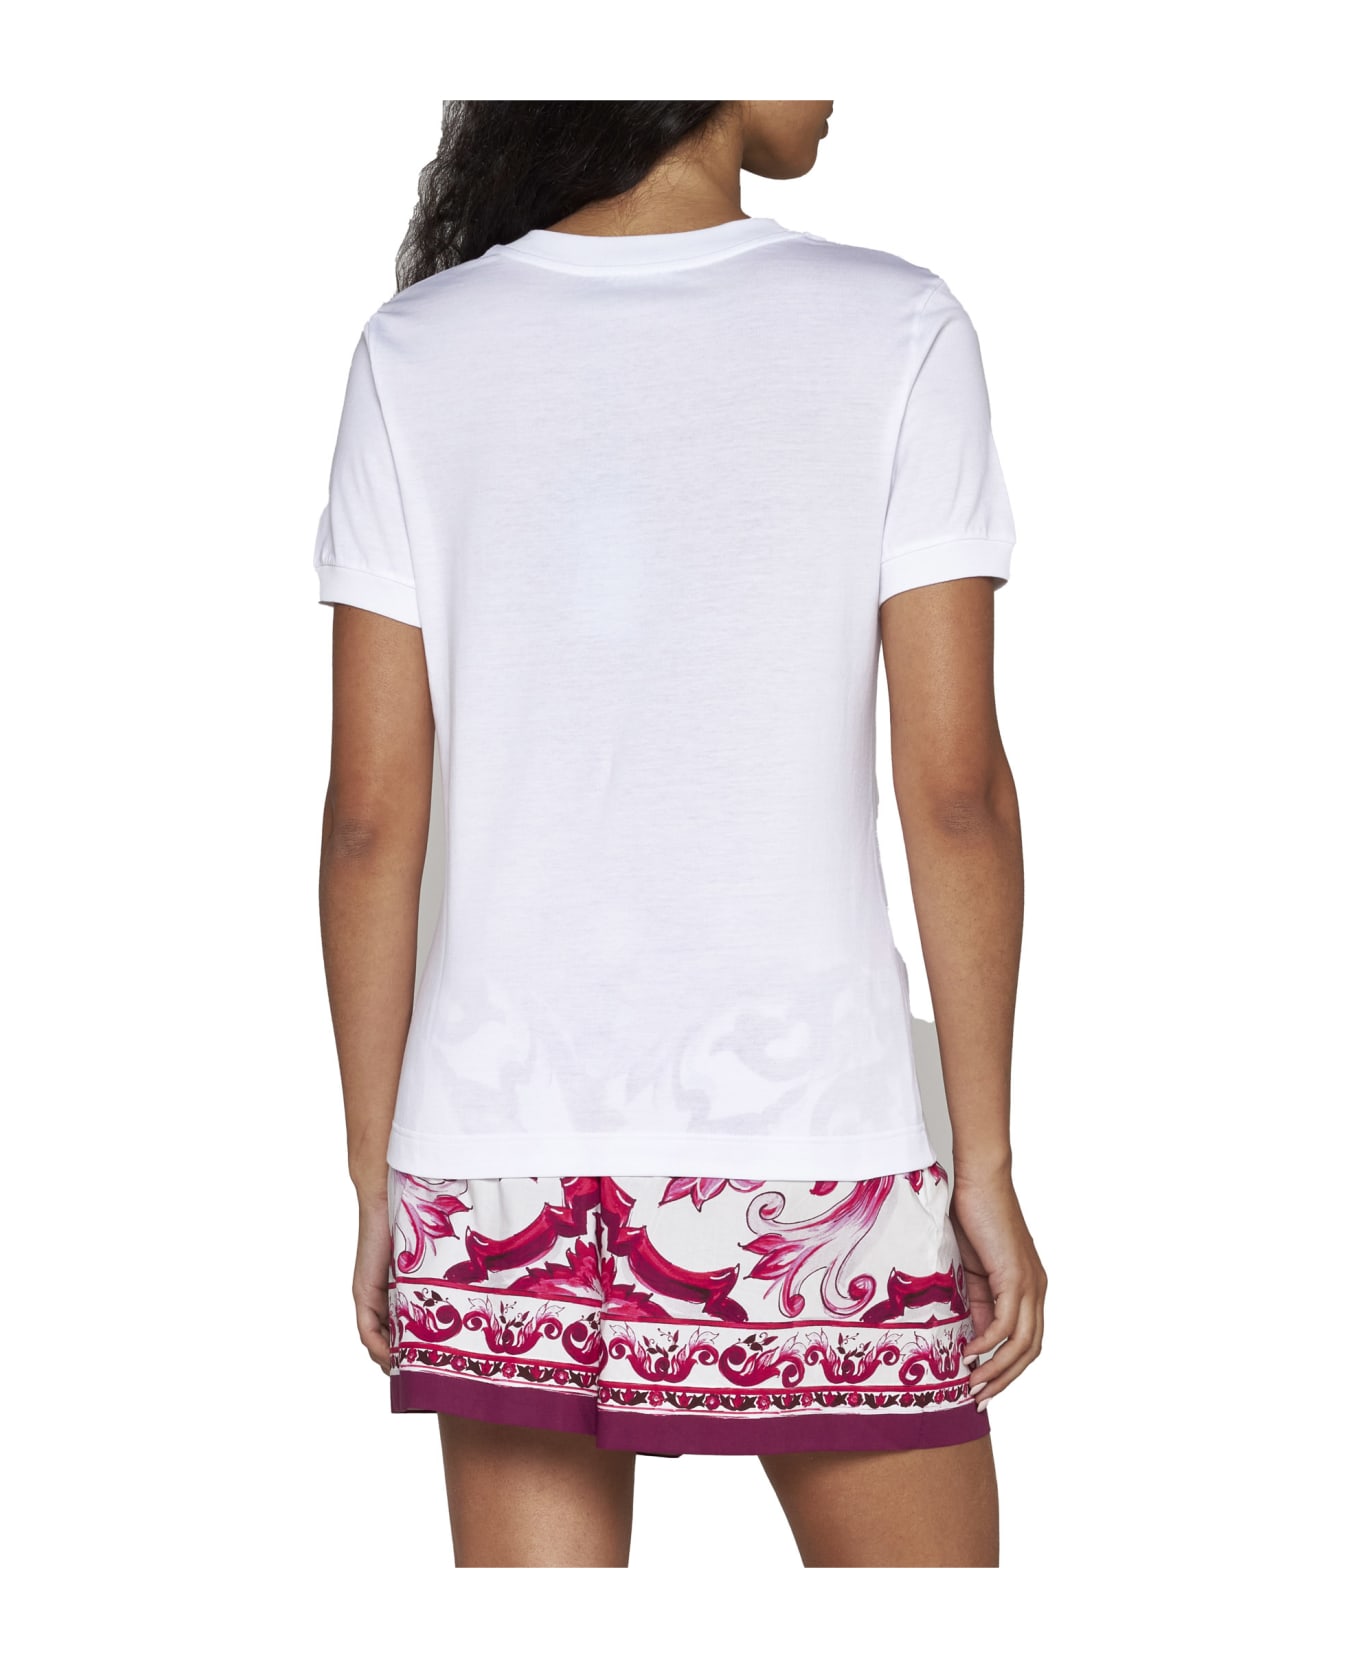 Dolce & Gabbana Essential T-shirt - White Tシャツ